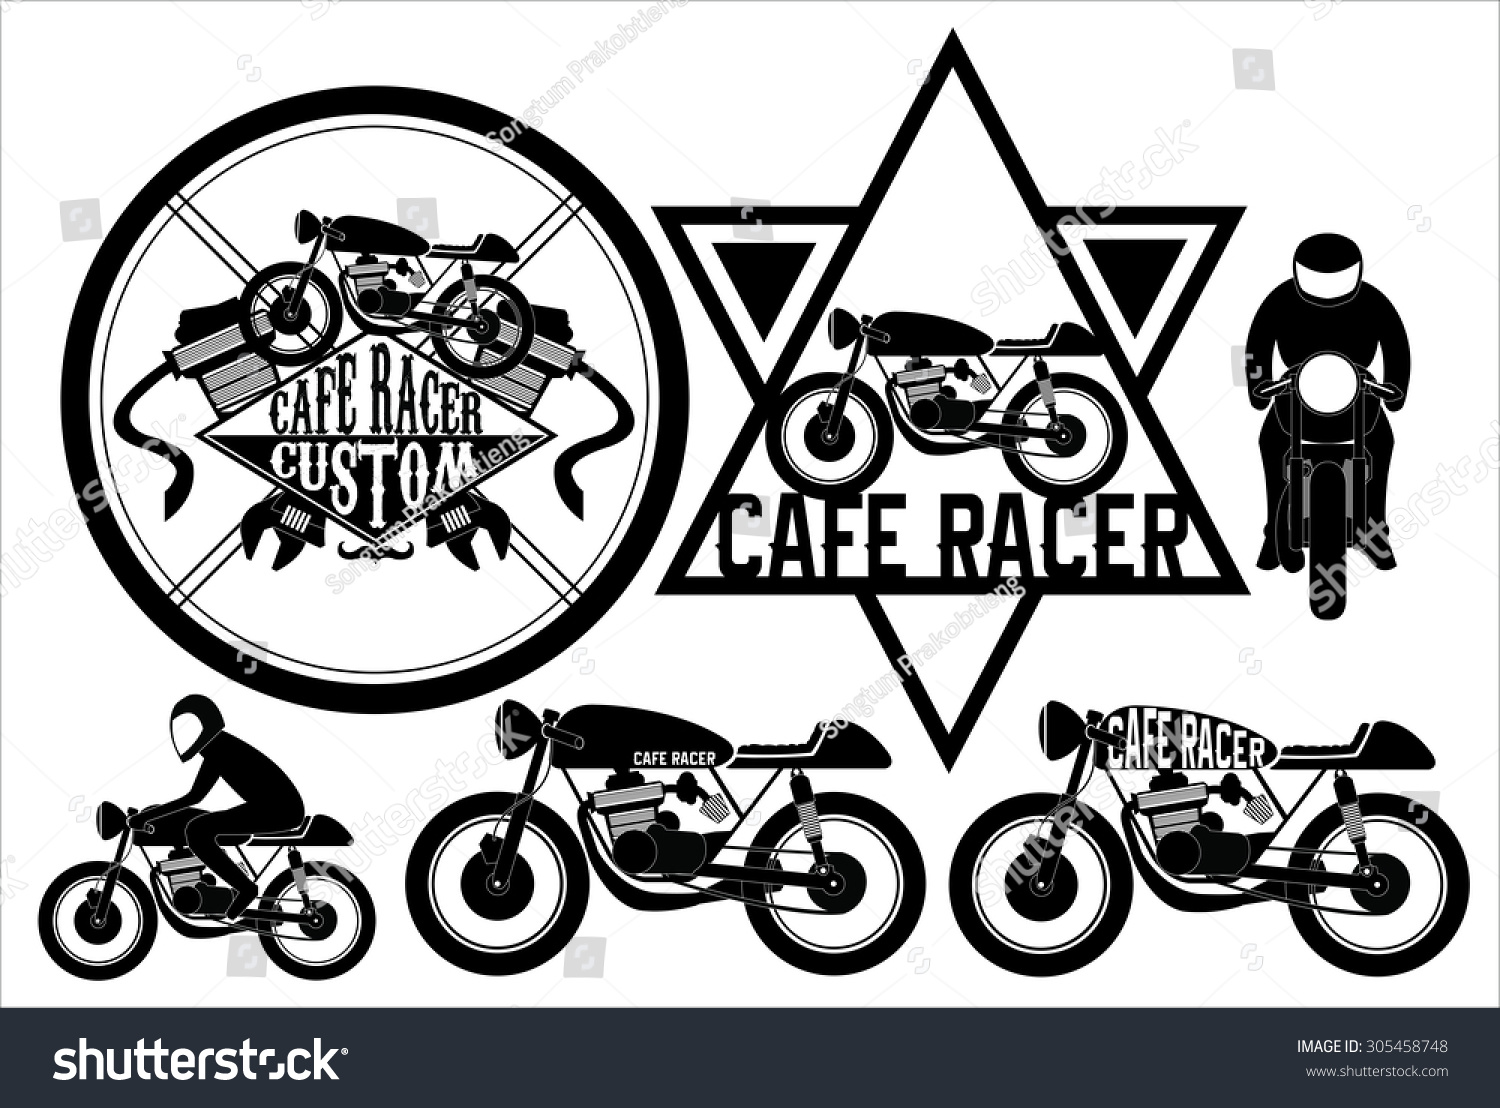 cafe racer clip art - photo #4